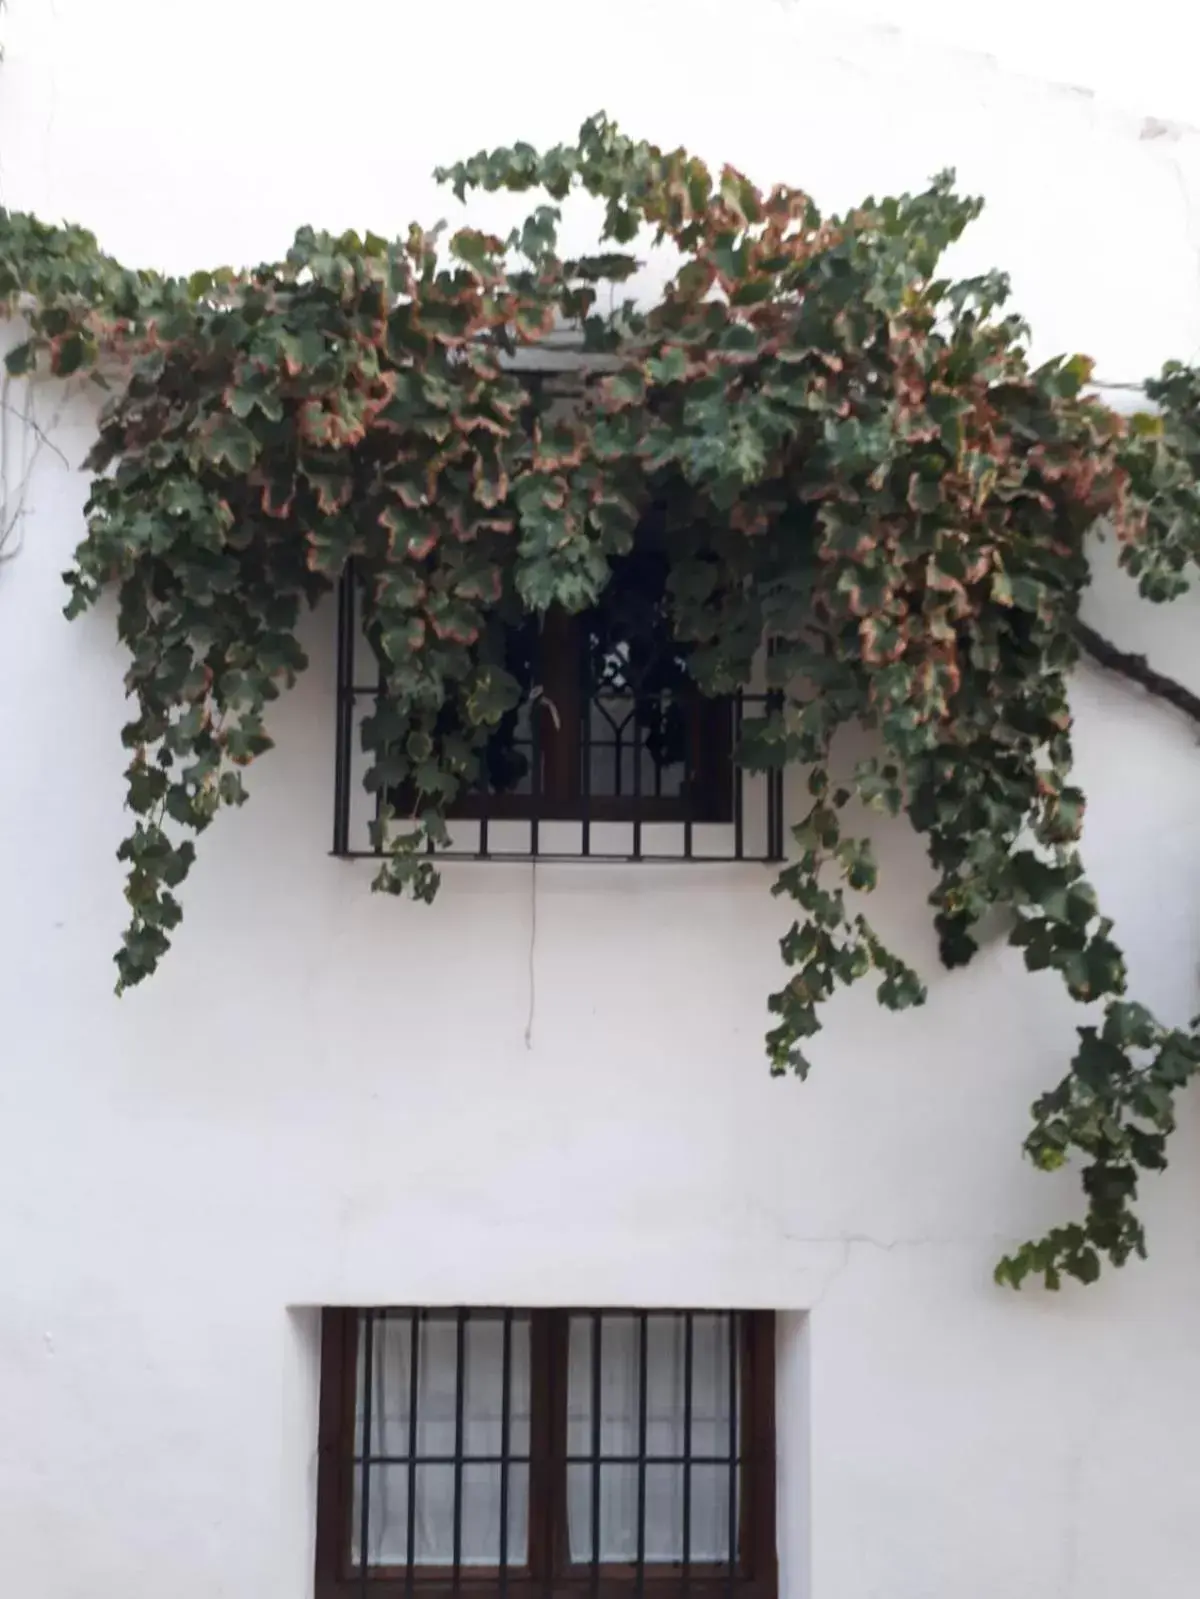 View (from property/room) in La Posada Amena